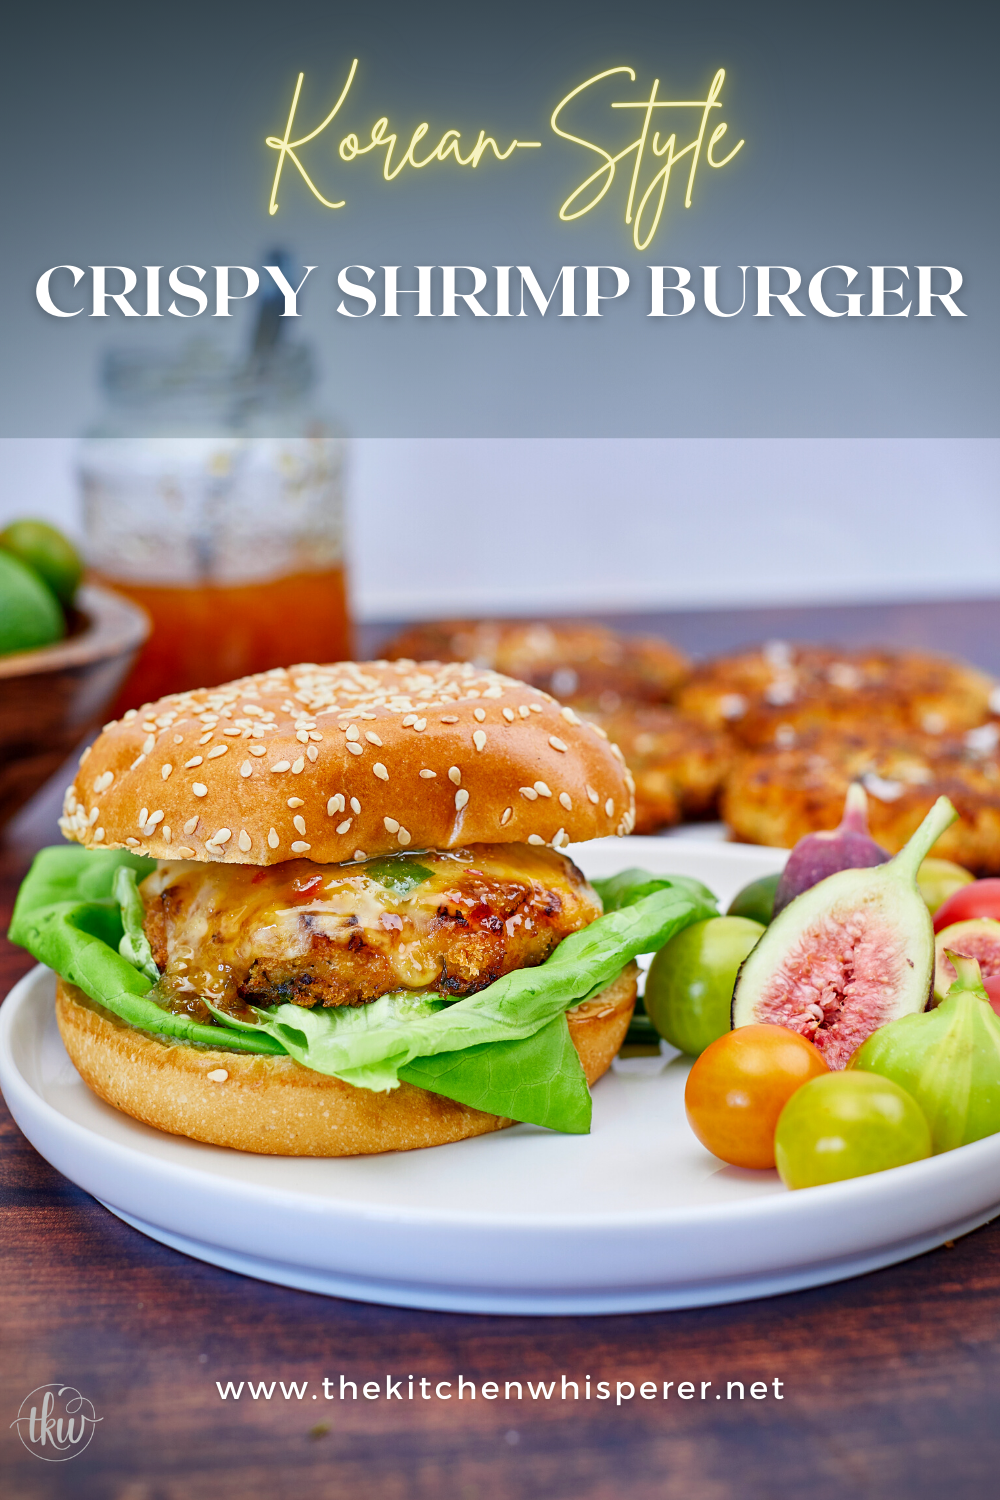 Korean-Style Crispy Shrimp Burgers